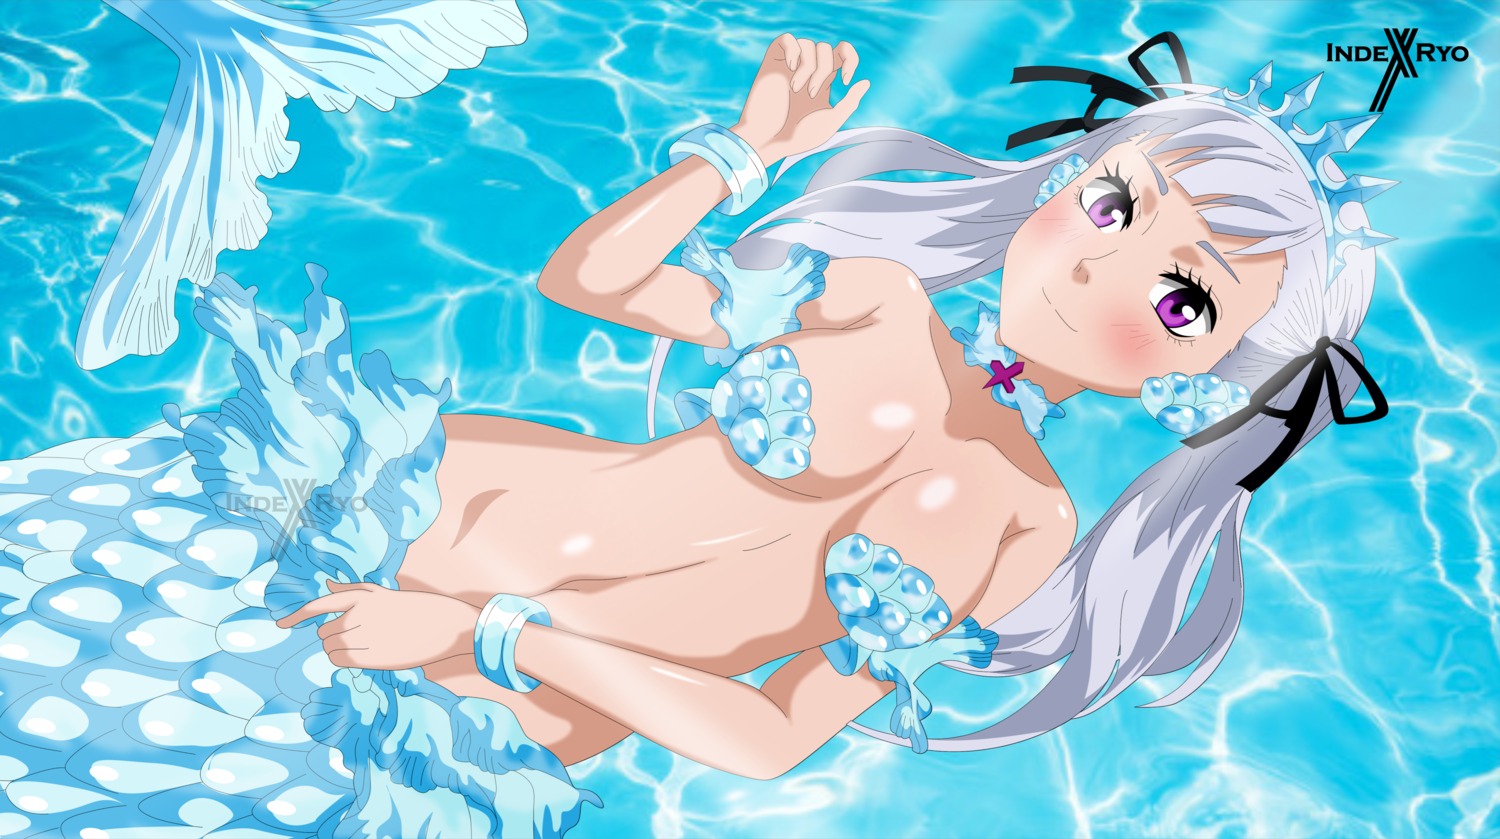 armored_mermaid bikini black_clover indexryo mermaid monster_girl noelle_silva pasties swimsuits tail topless wet